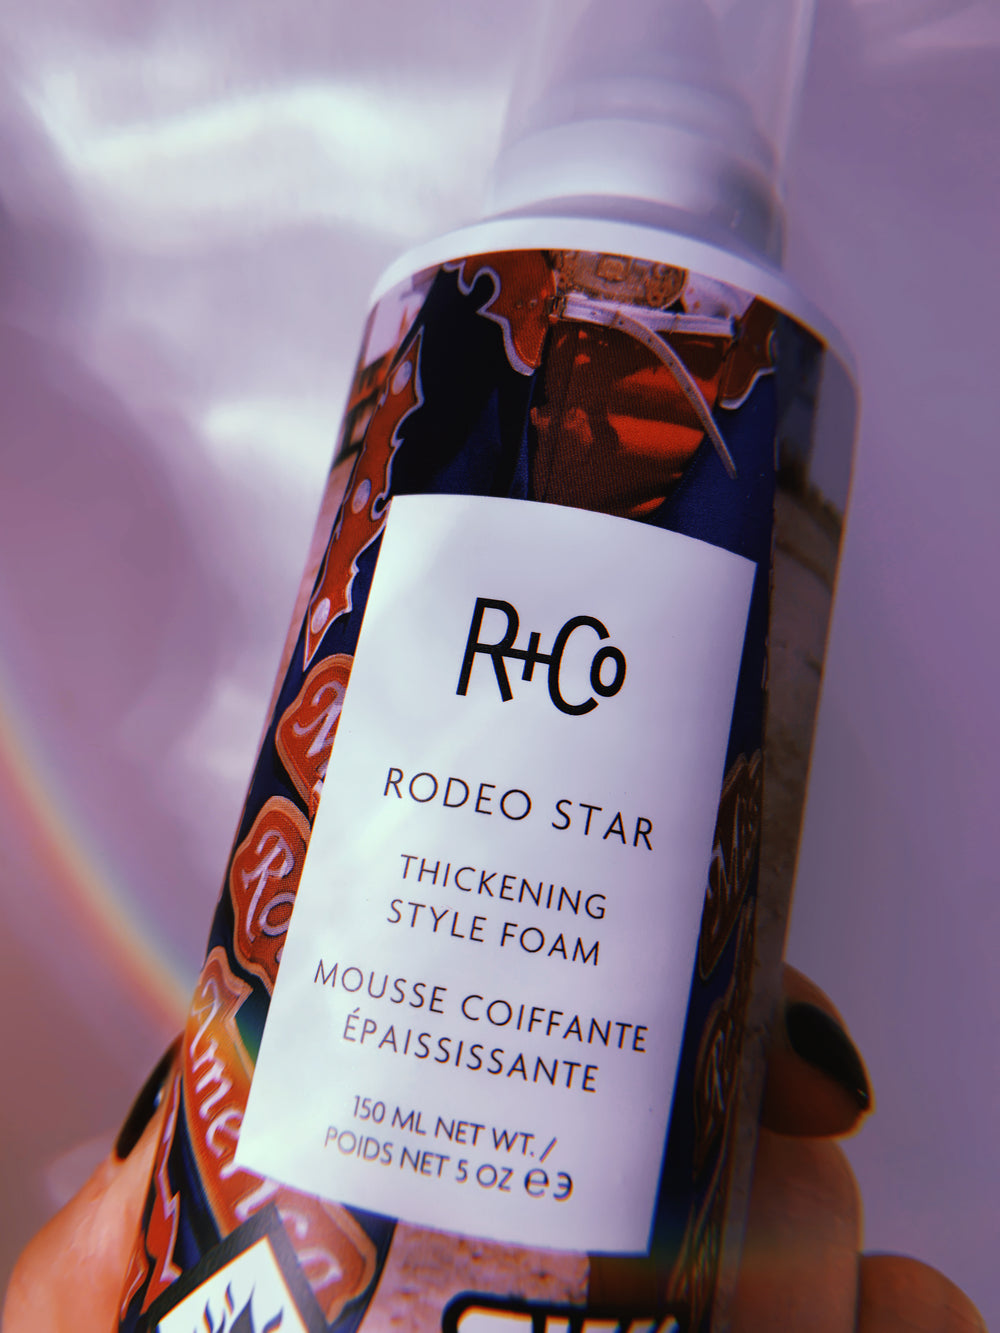 Twentyseven Toronto - R+Co Rodeo Star Thickening Style Foam - Full Size (150ml)